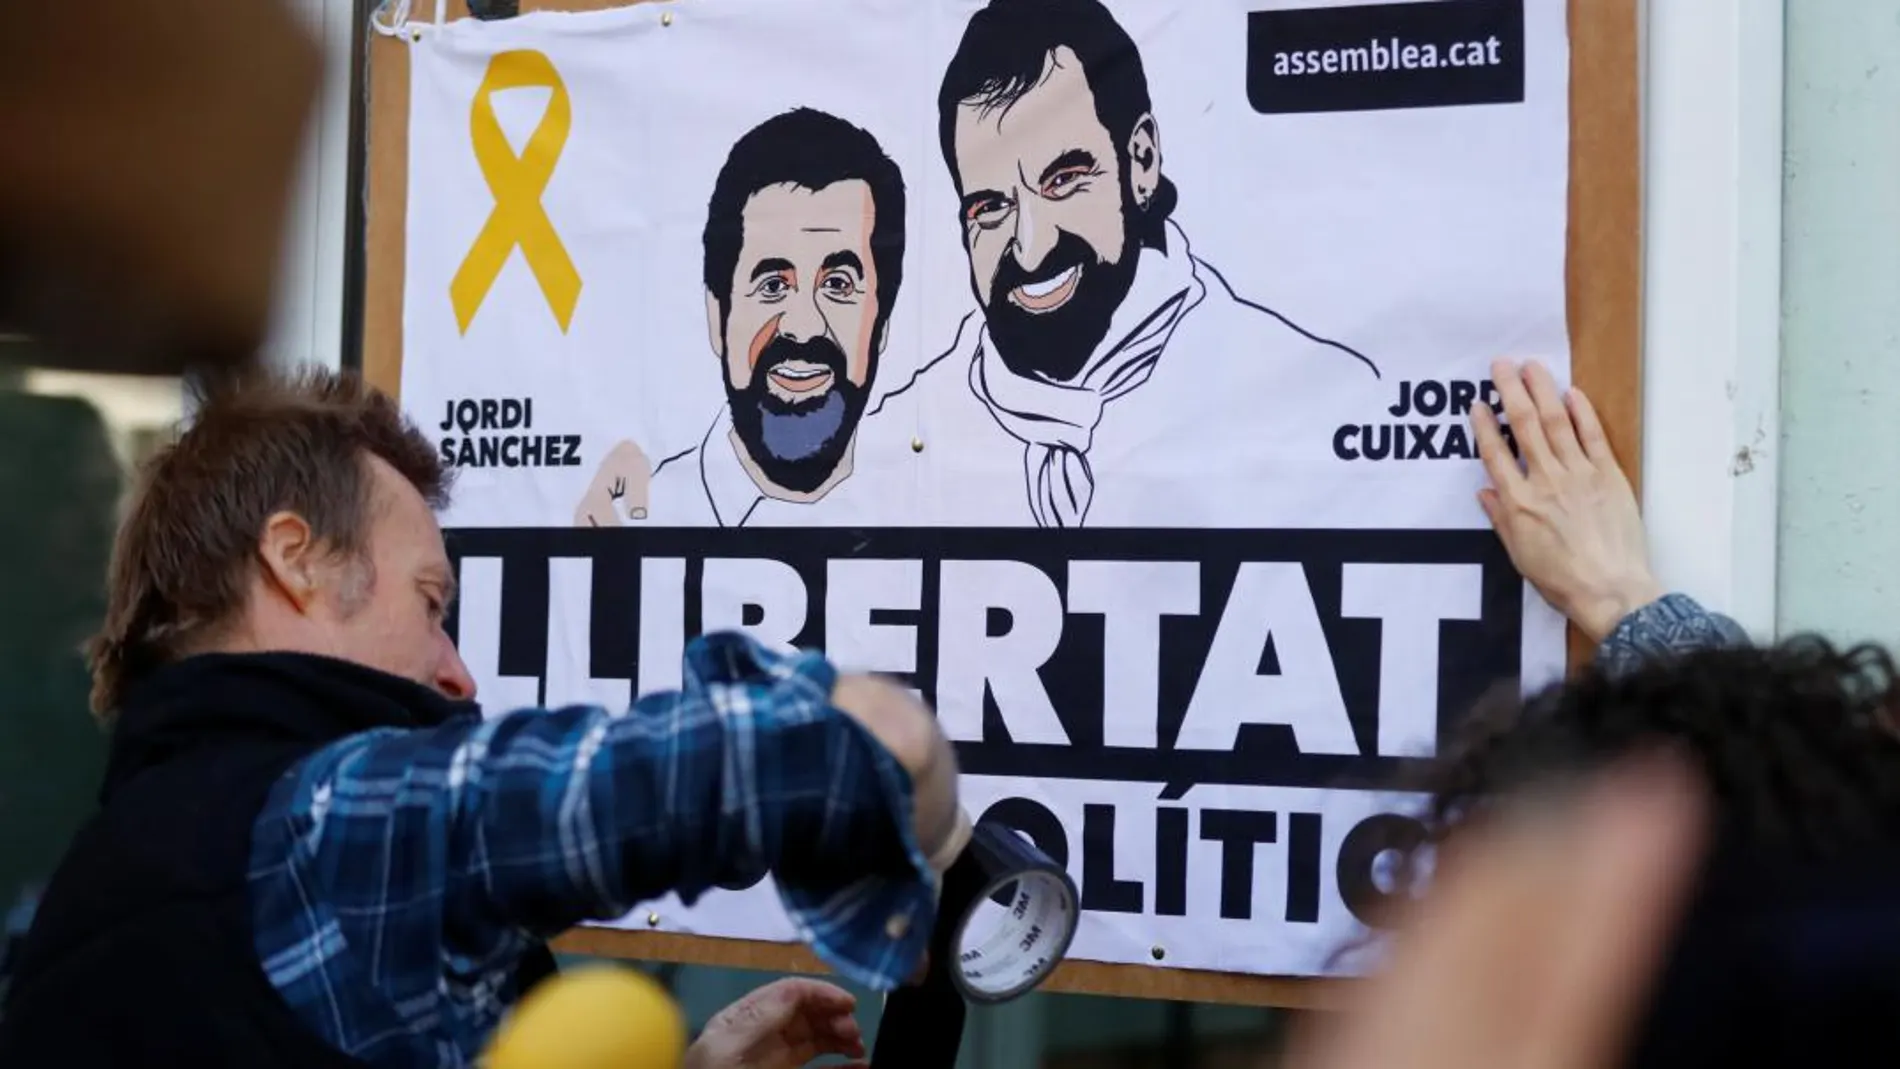 Imagen de un cartel que pide la libertad de Cuixart y de Jordi Sánchez